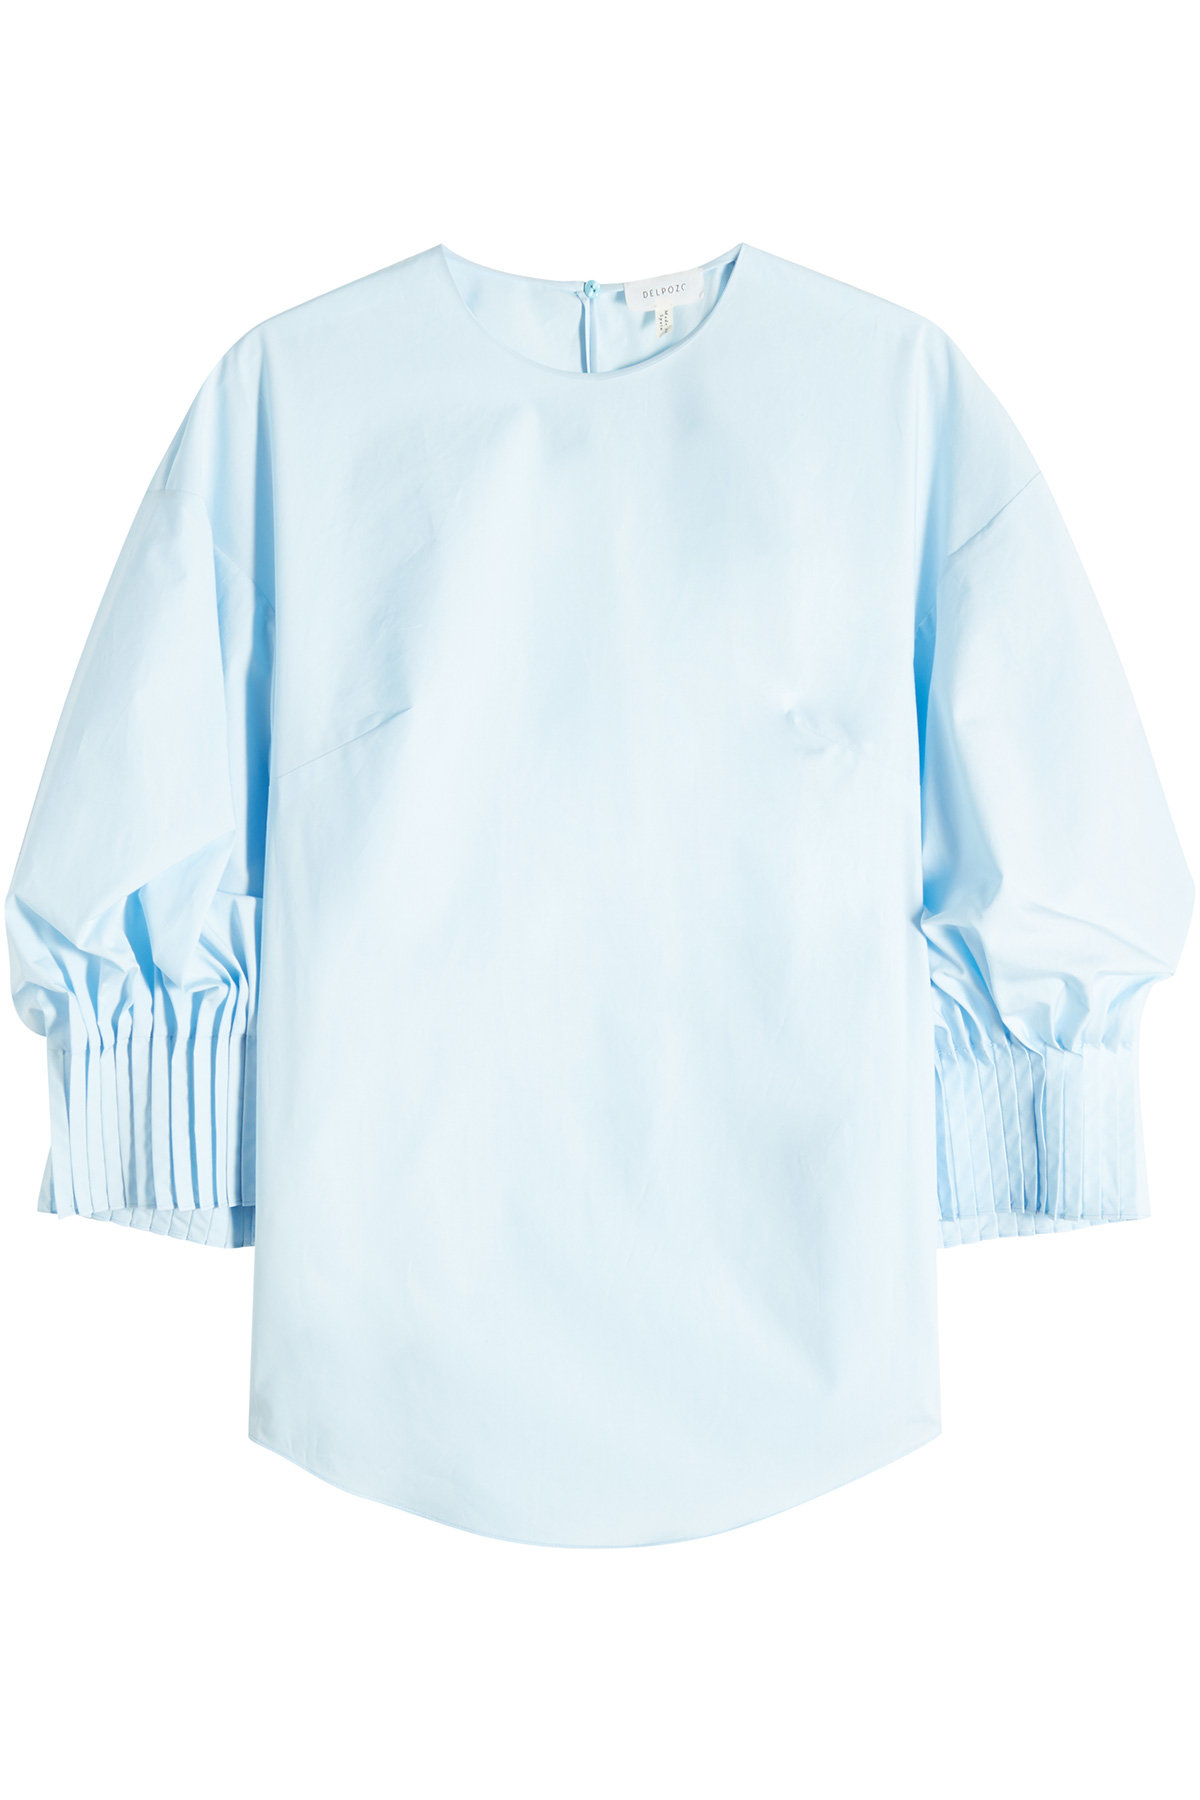 Delpozo - Pintuck Cuff Shirt